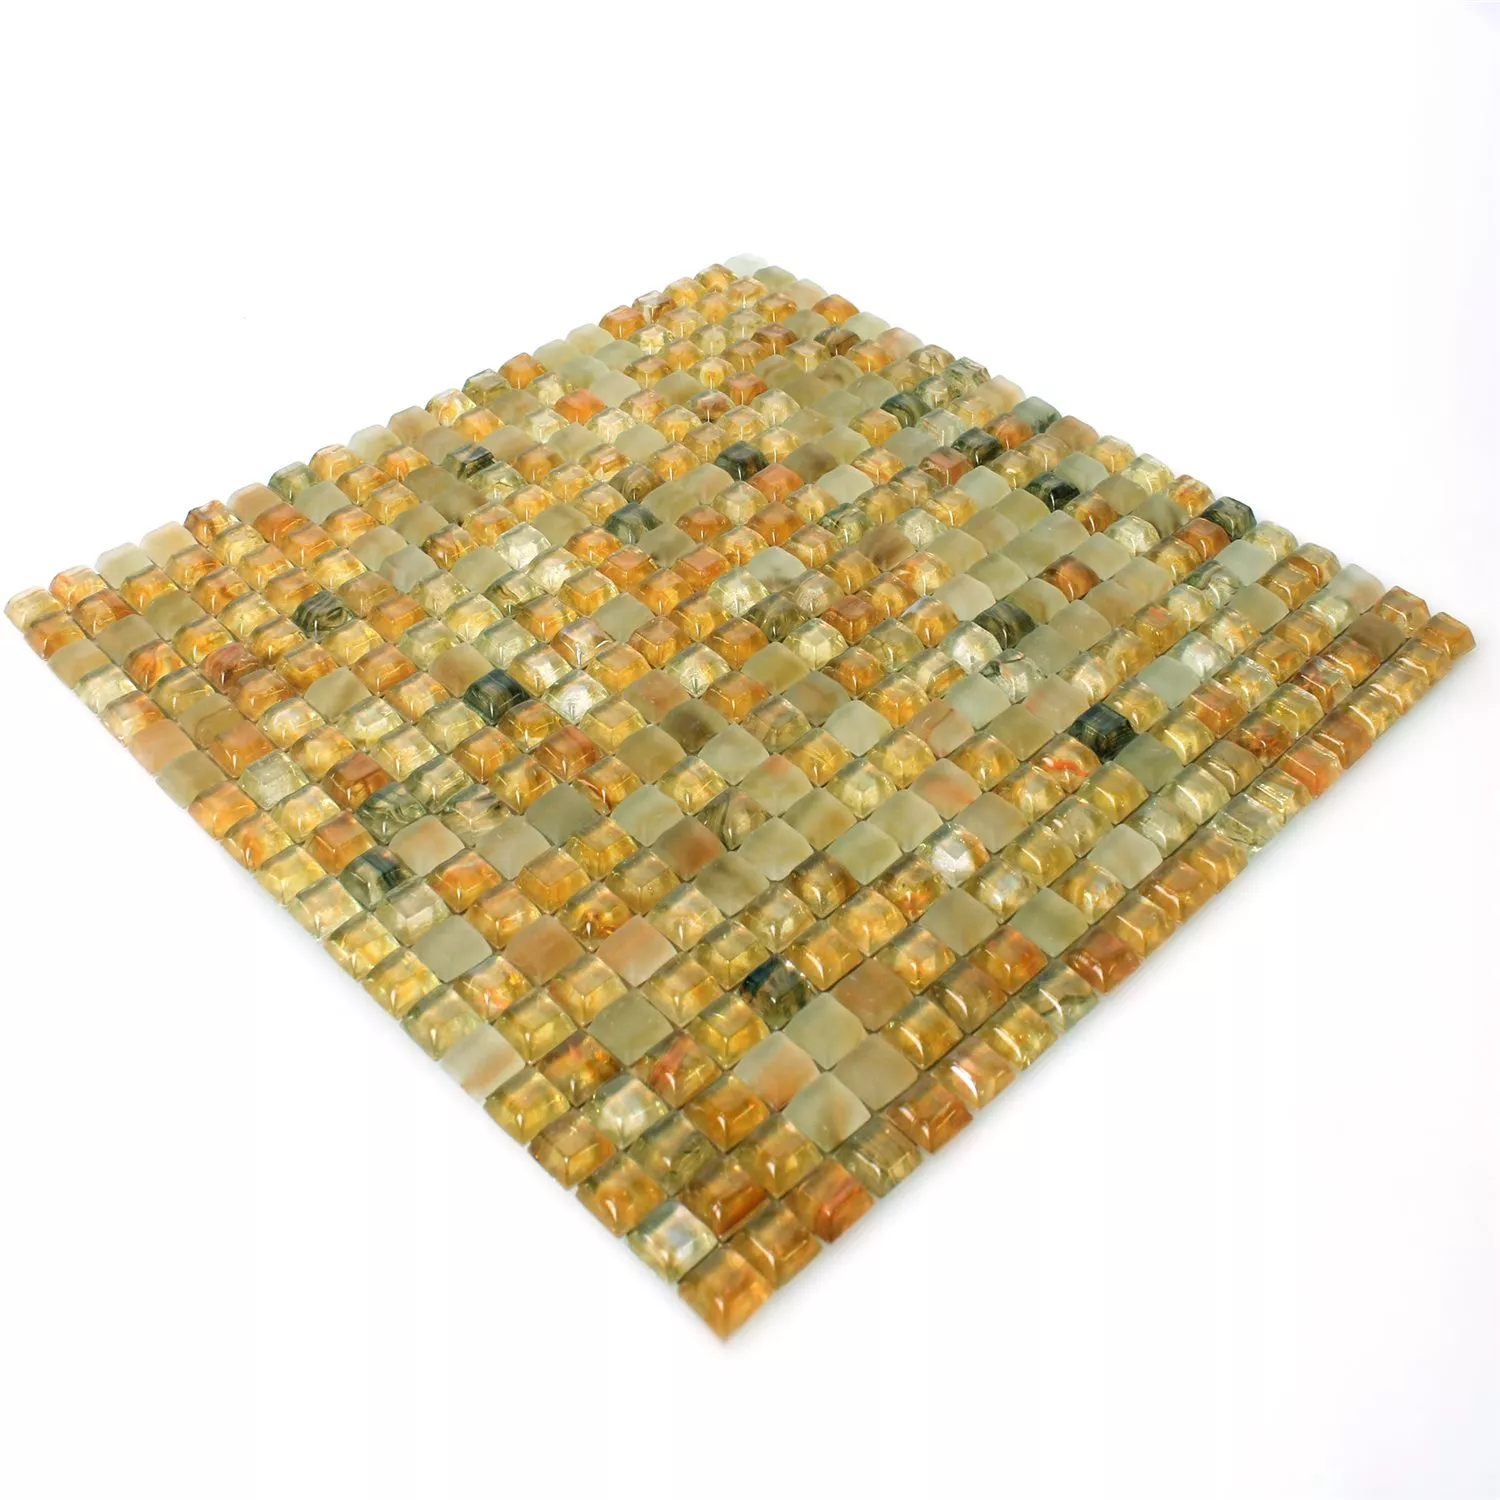 Staklo Bazen Mozaik Pločice Pergamon Bež